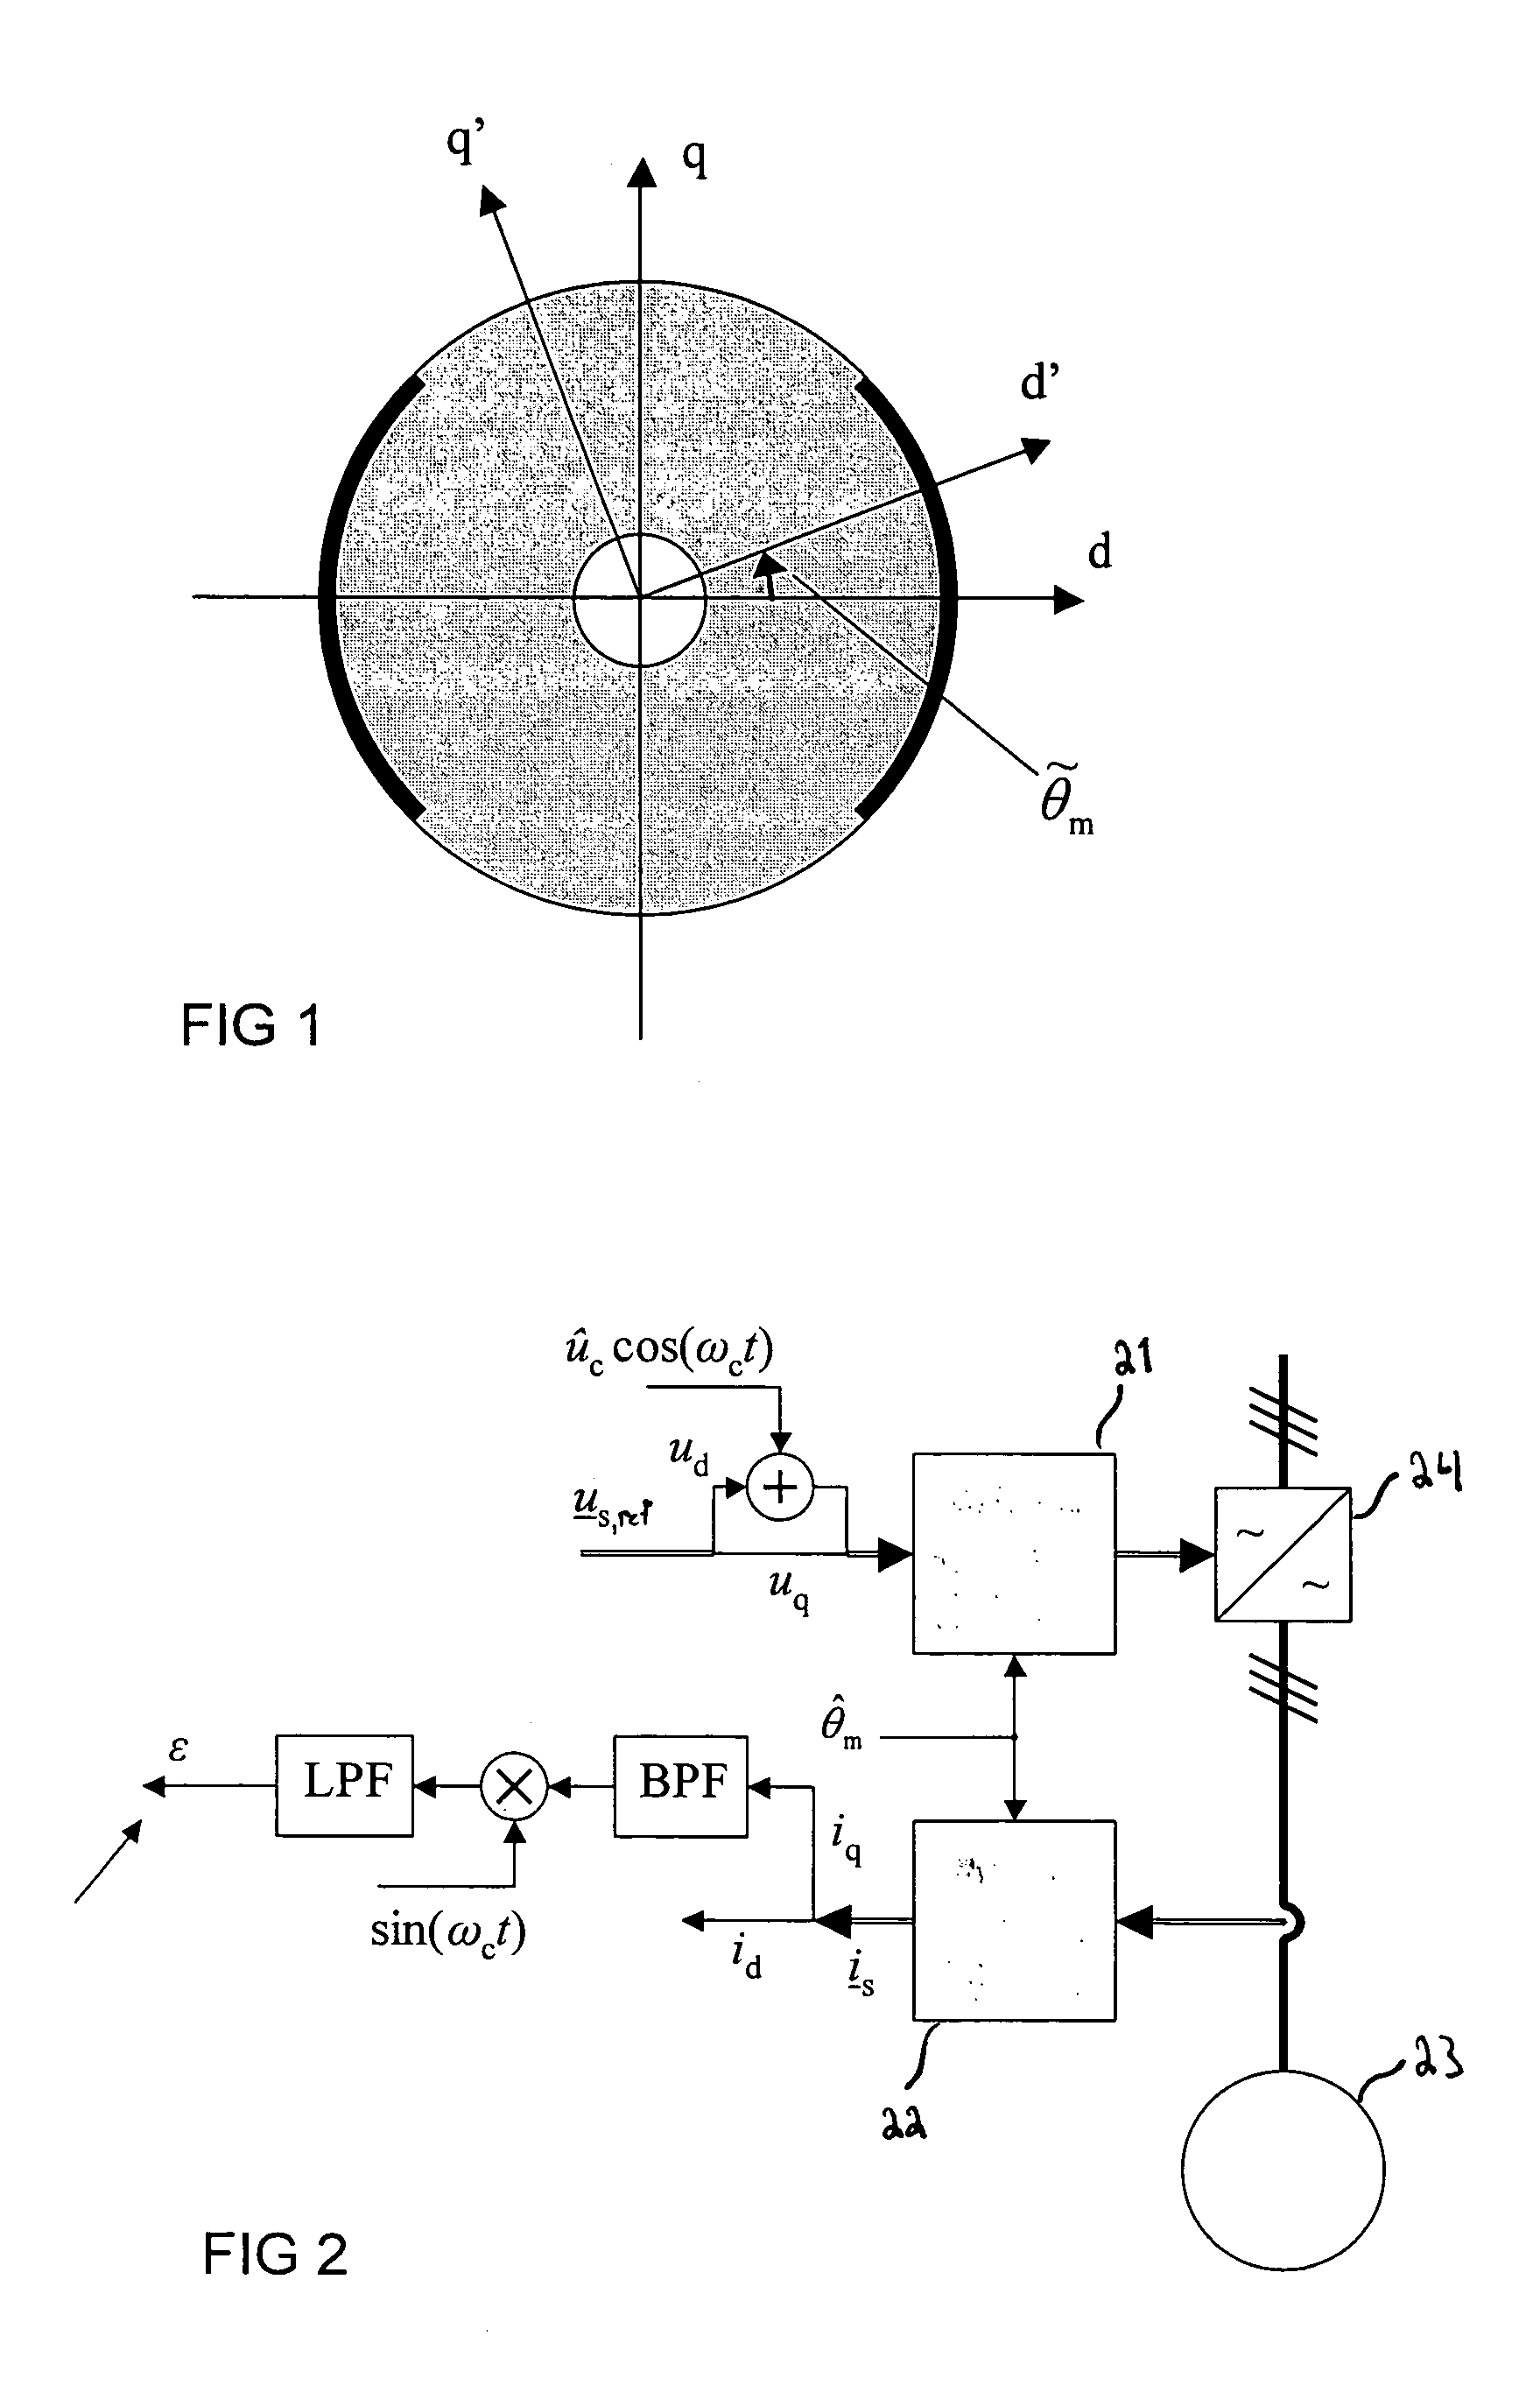 Method in salient-pole permanent magnet synchronous machine